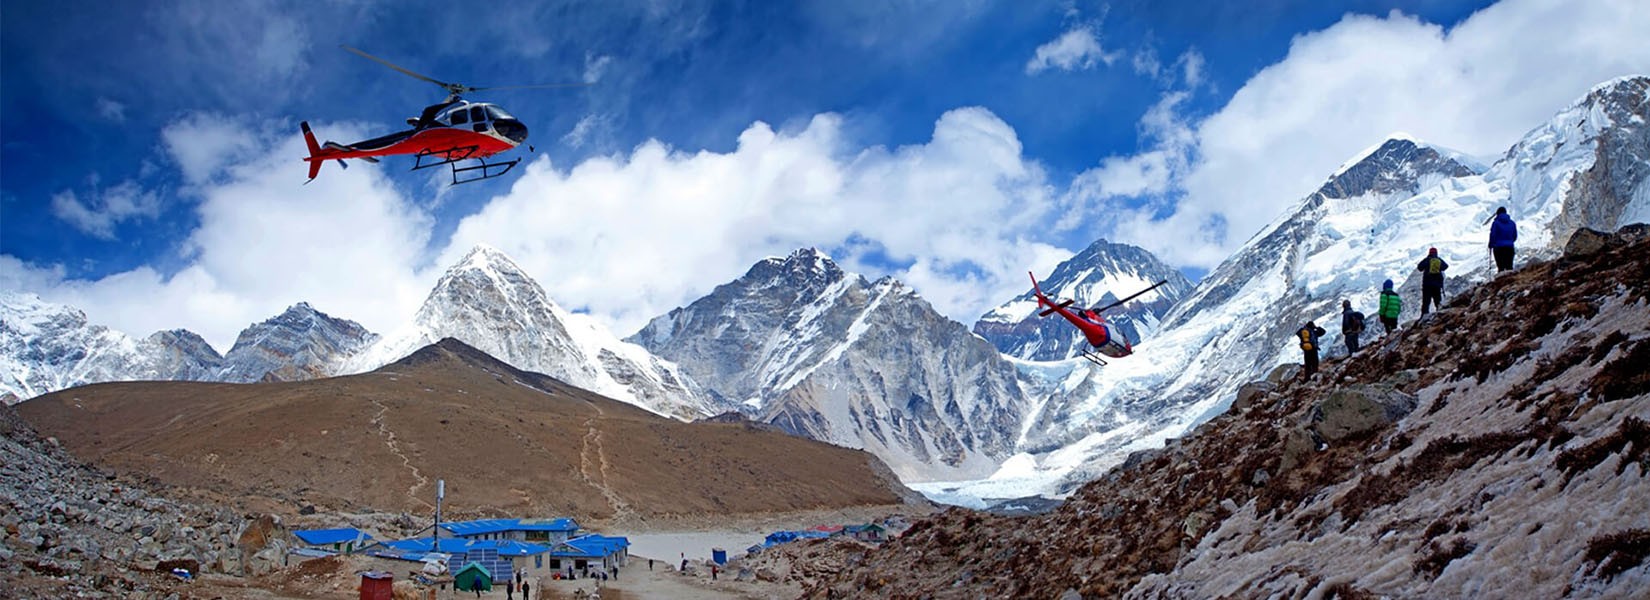 Everest-Base-Camp-Helicopter-Tour.jpeg-1654406105.jpeg